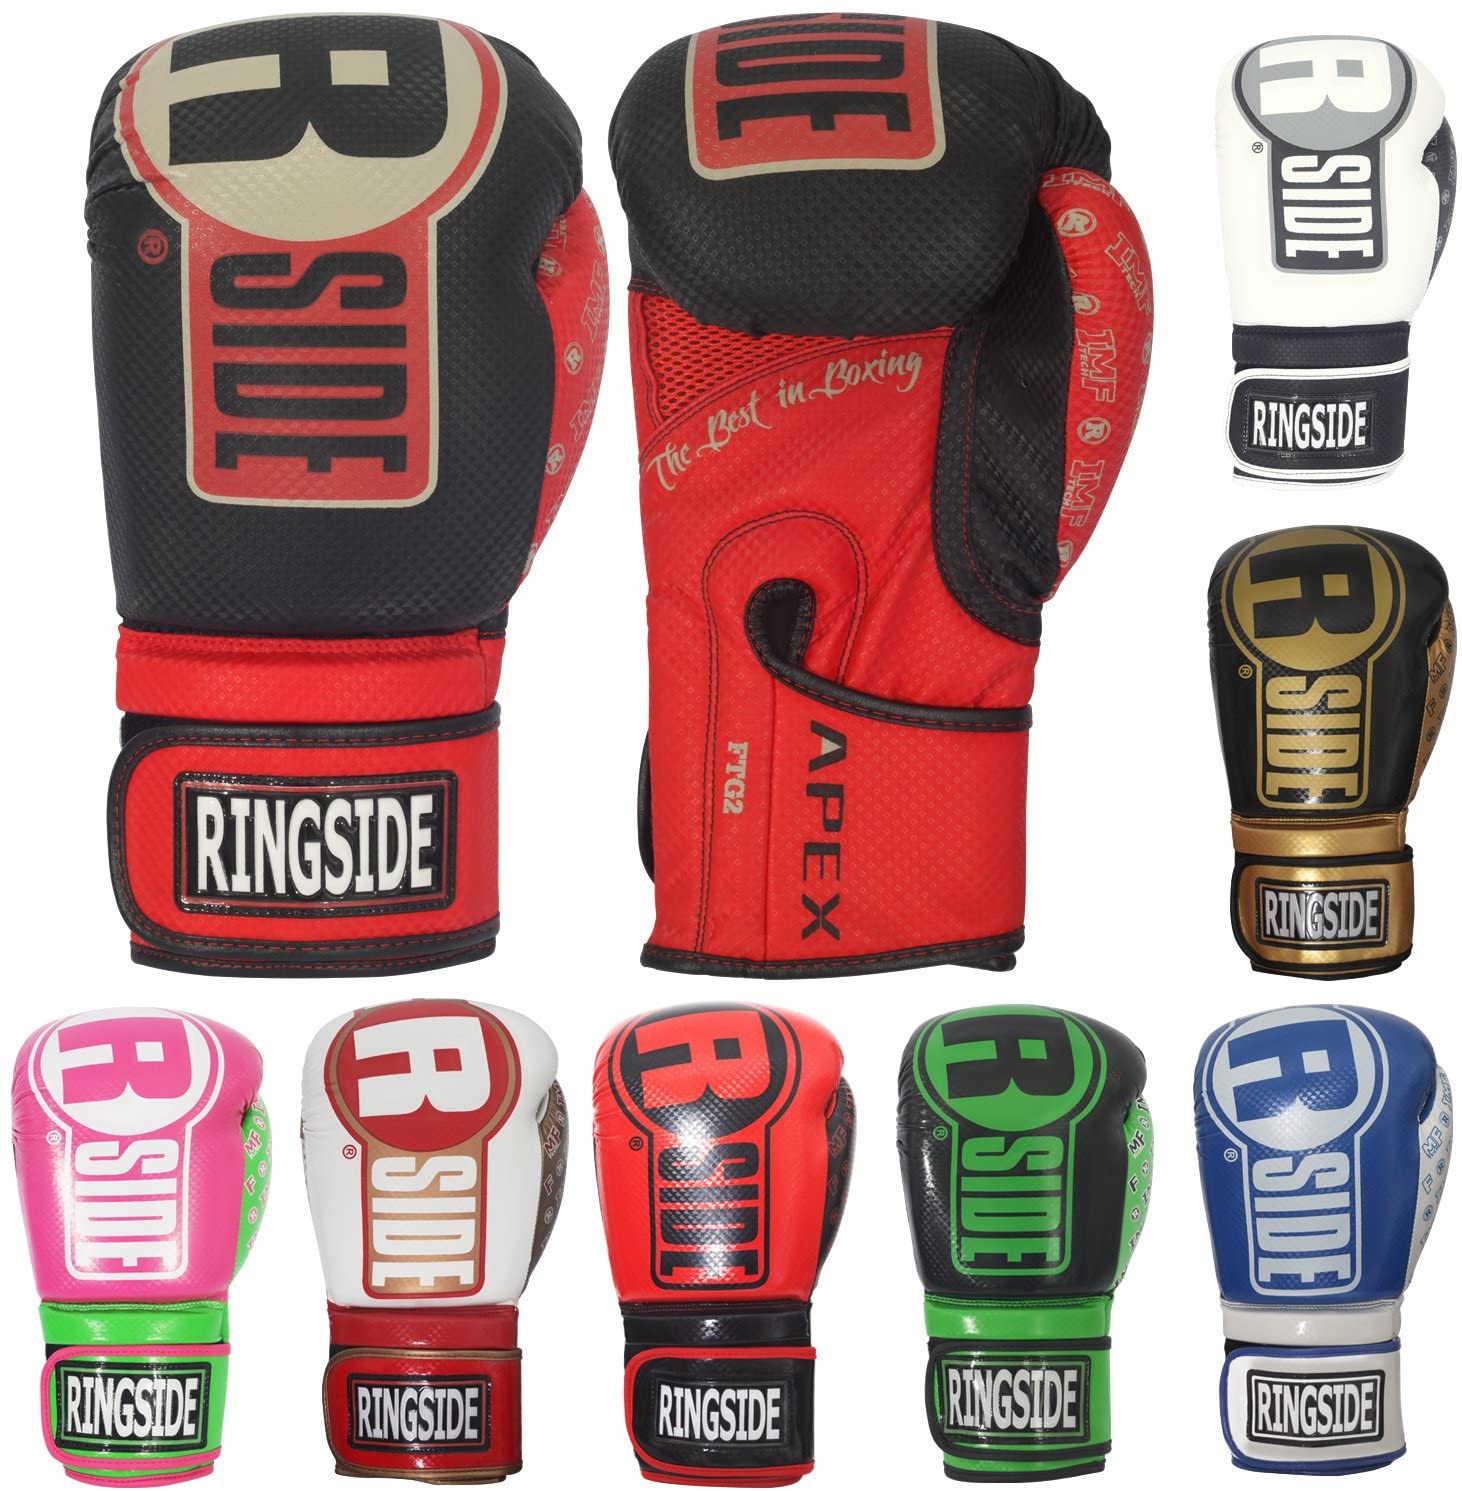 Ringside Apex Flash Sparring Boxing Gloves 16 oz Blue/White - image 2 of 3